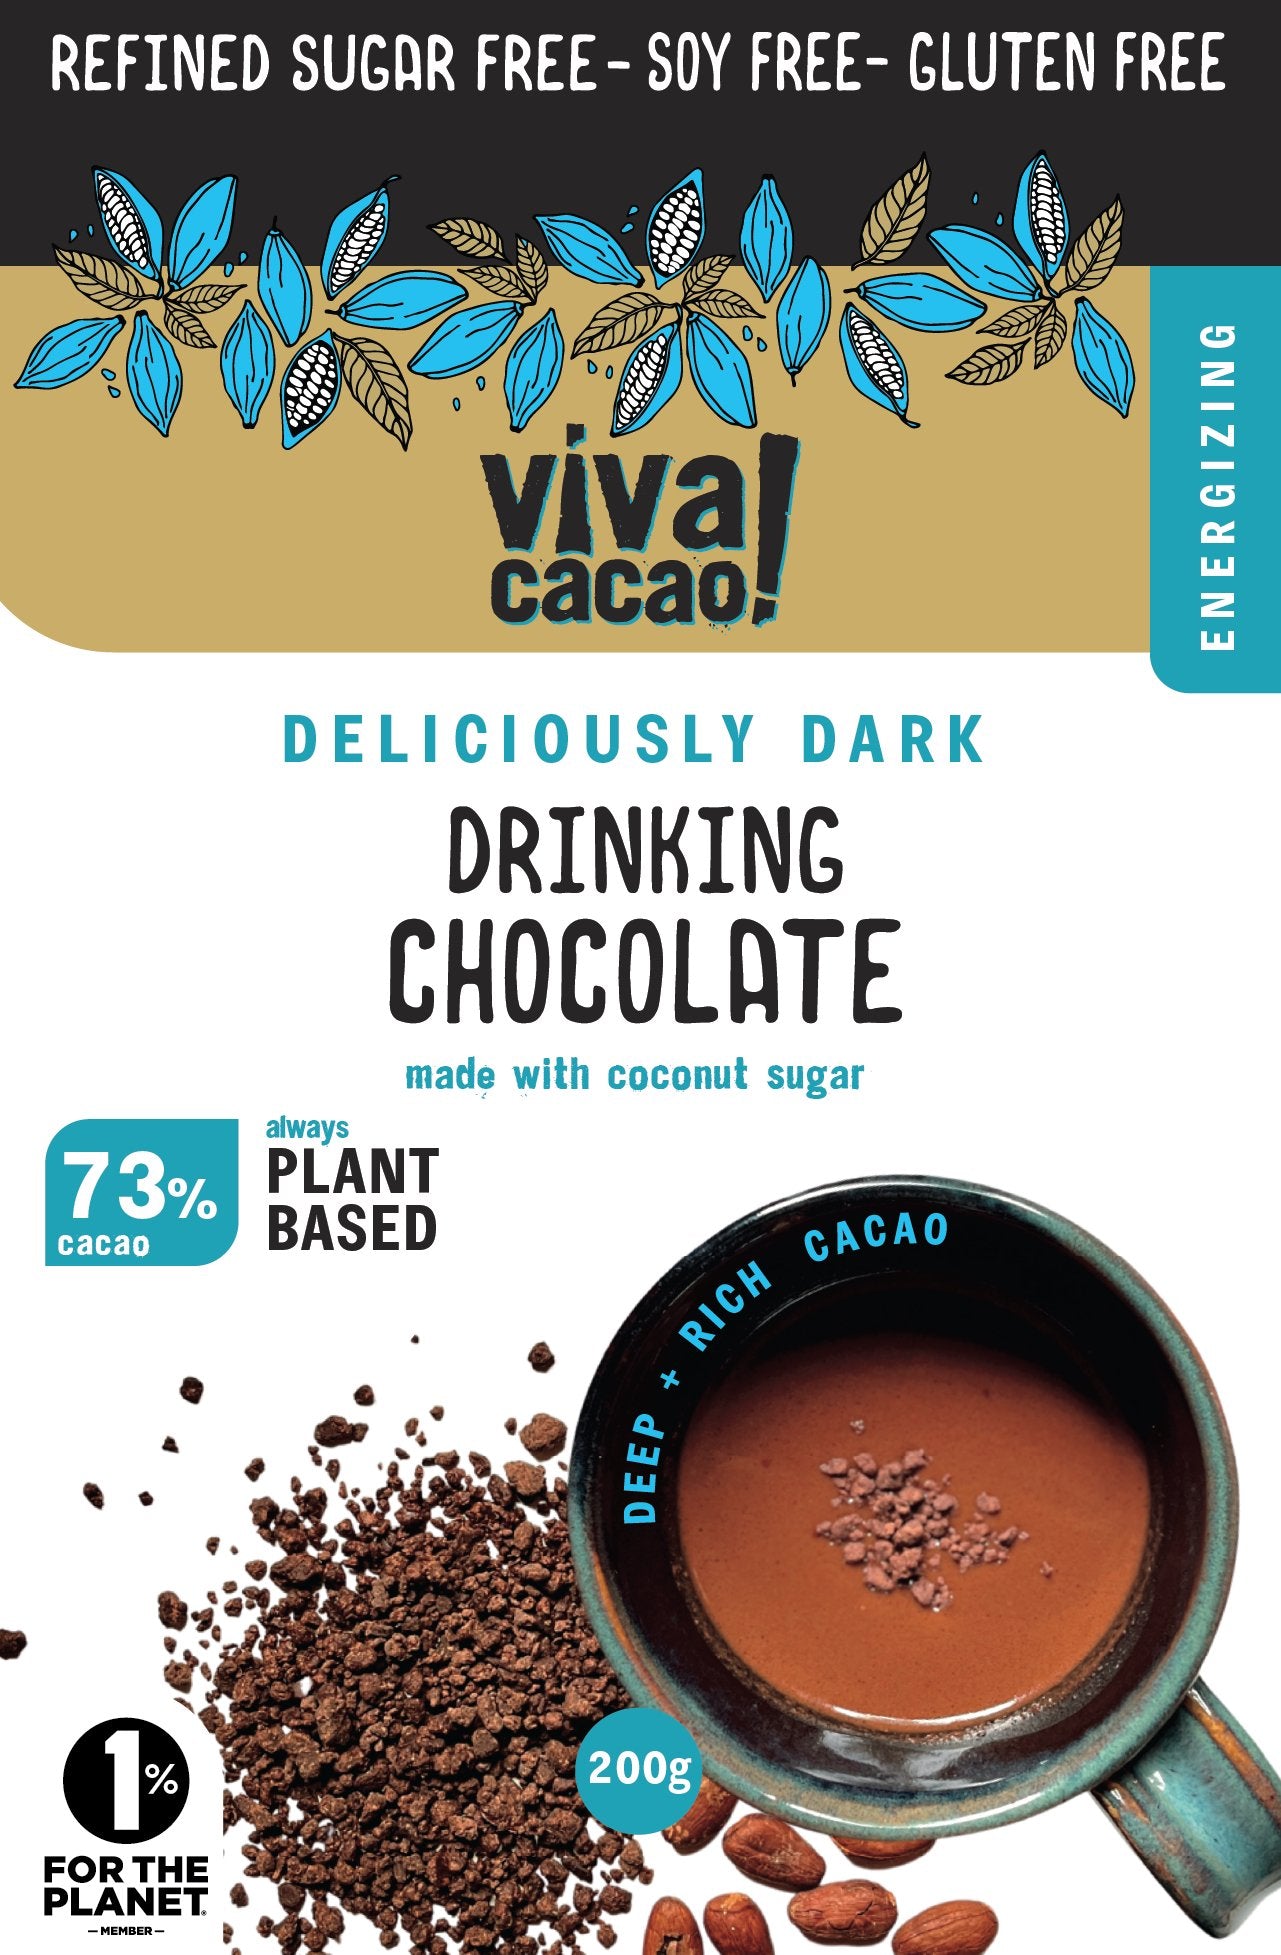 Deliciously Dark Drinking Chocolate - VIVA CACAO!